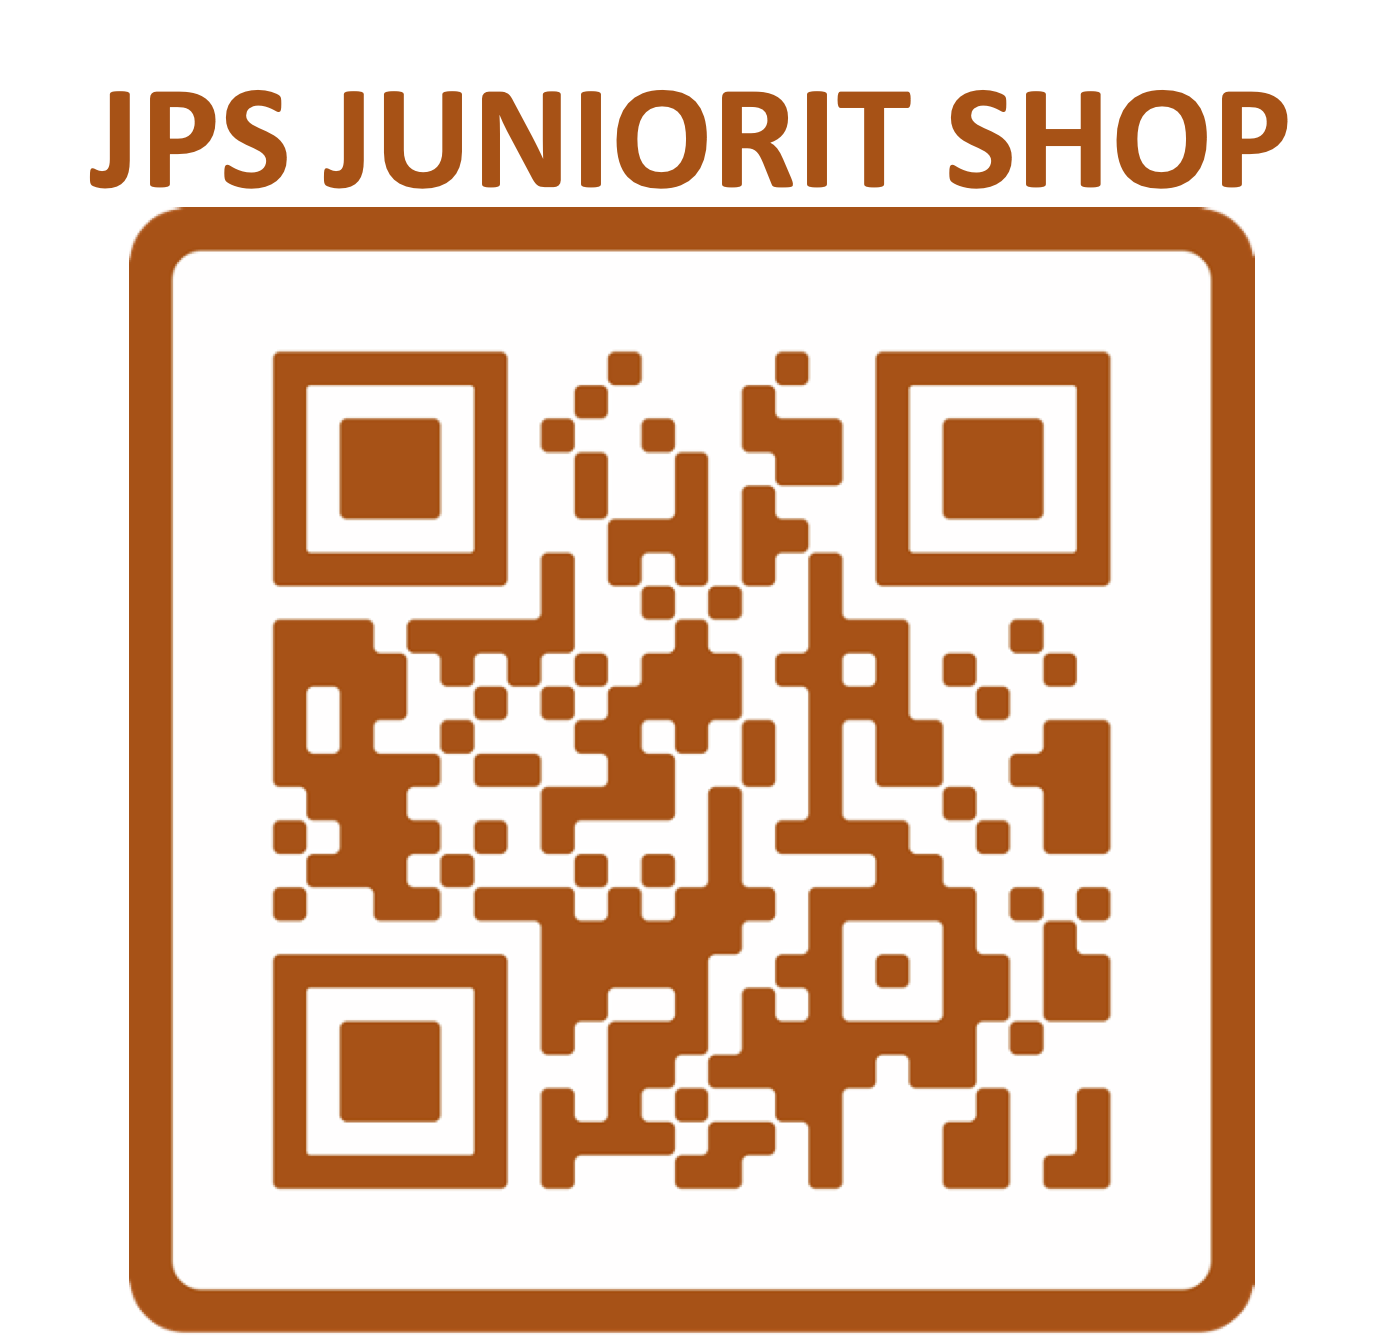 JPS Juniorit Shop